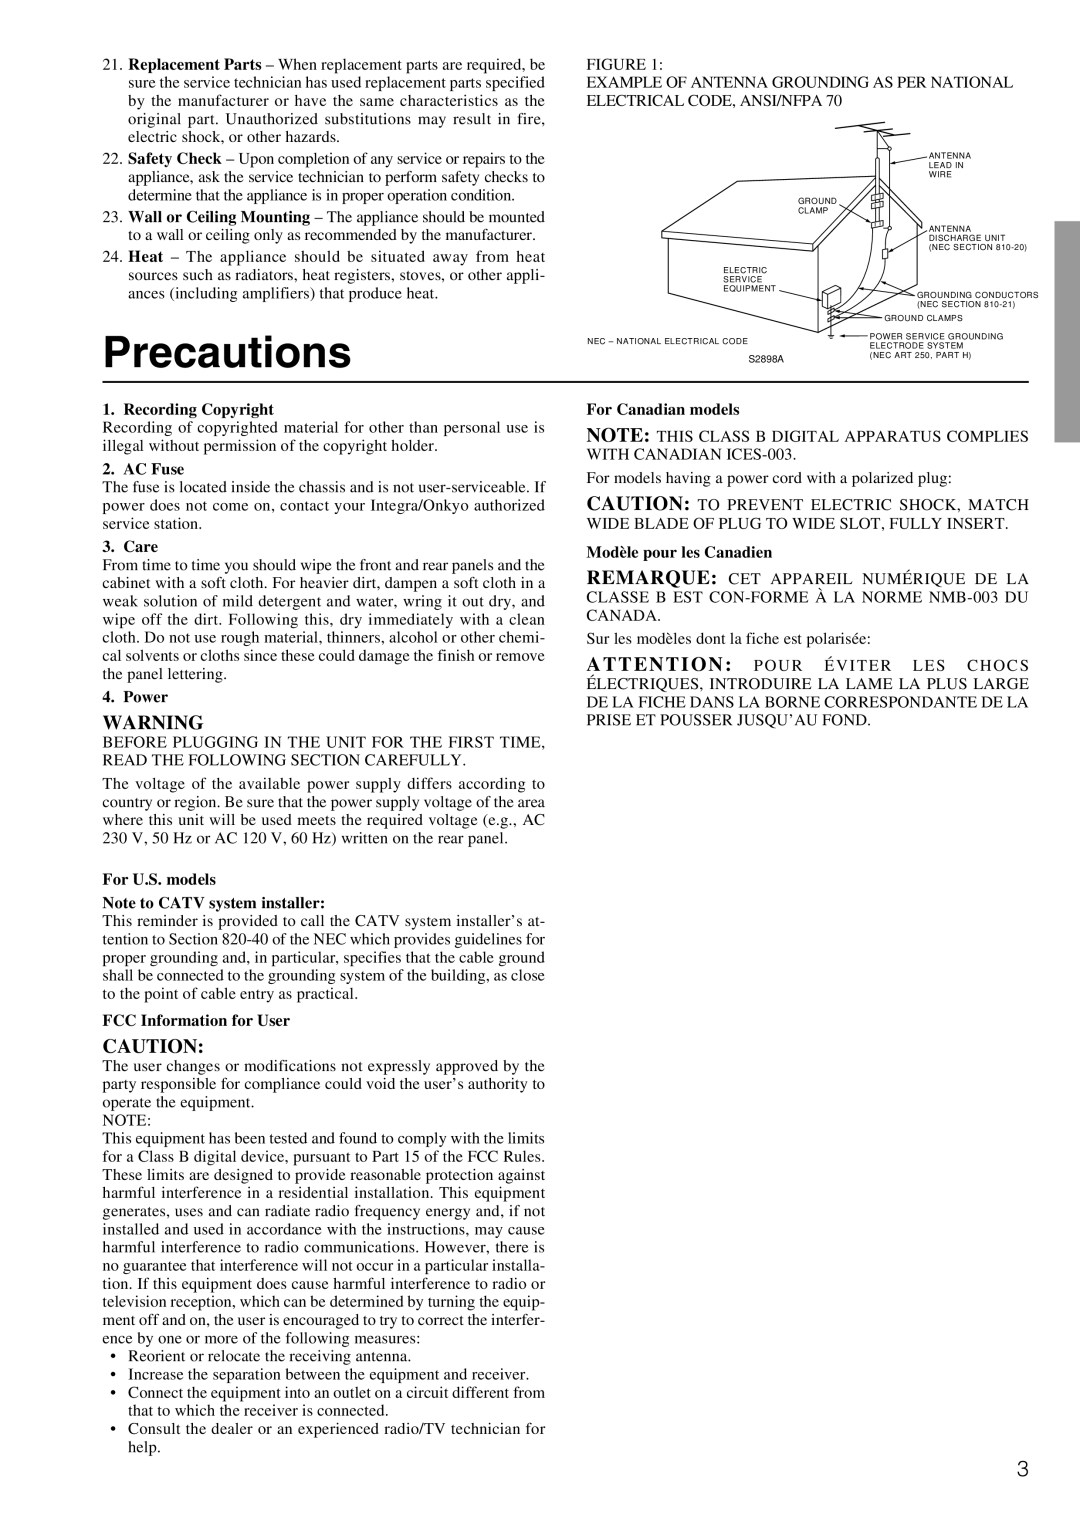 Integra DTR-8.2 instruction manual Precautions 